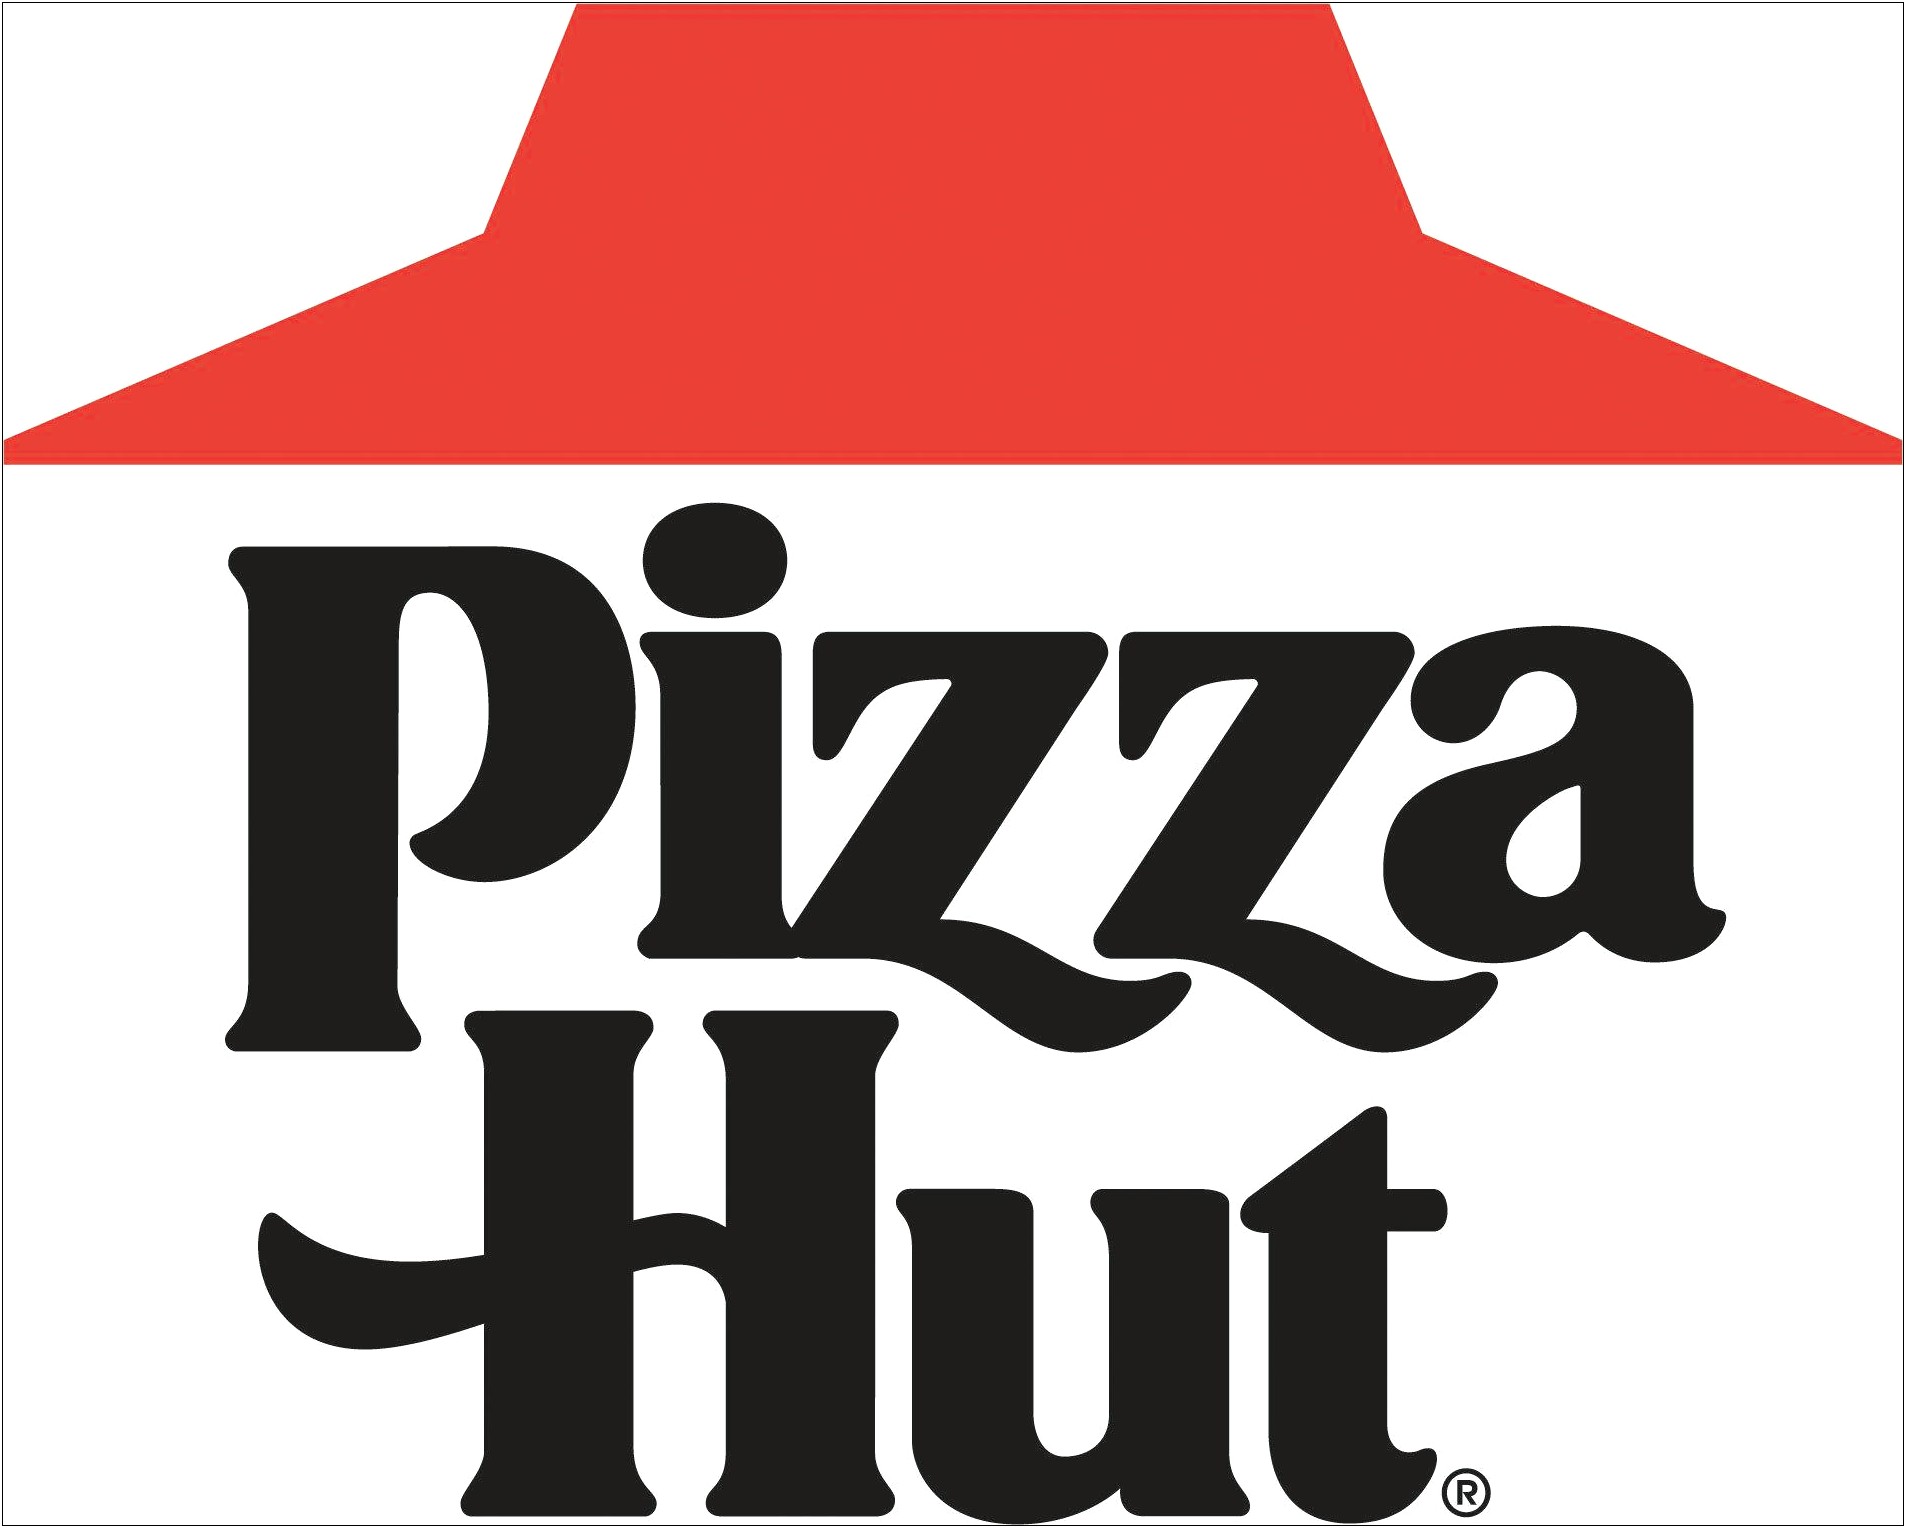 Pizza Hut Manager Job Description For Resume